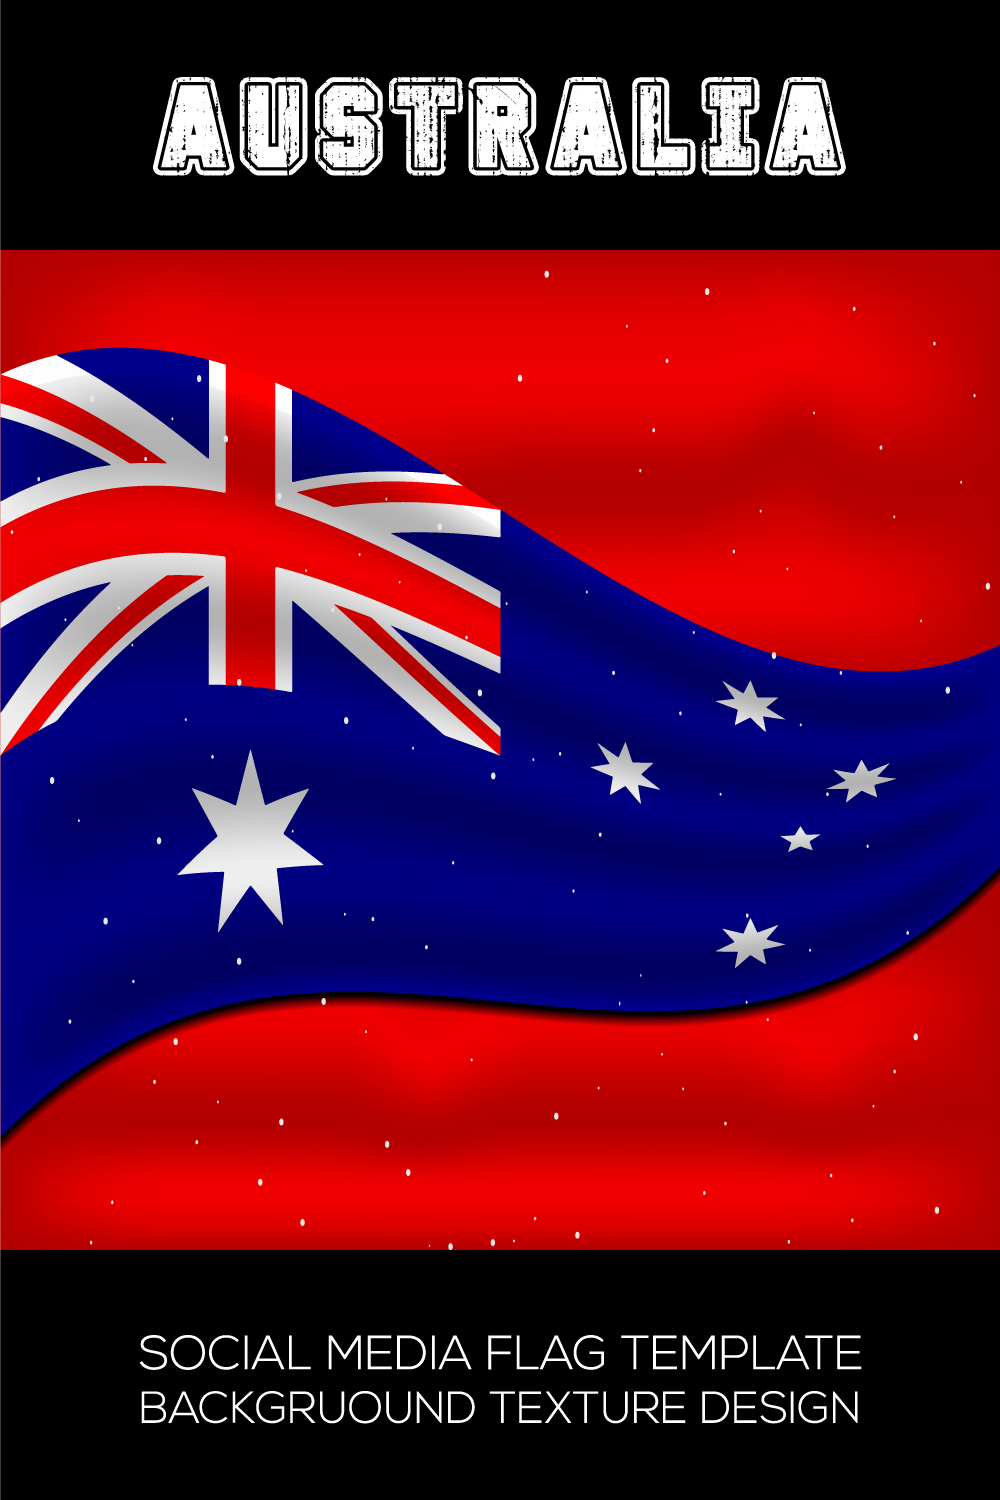 Beautiful image of the flag of Australia.